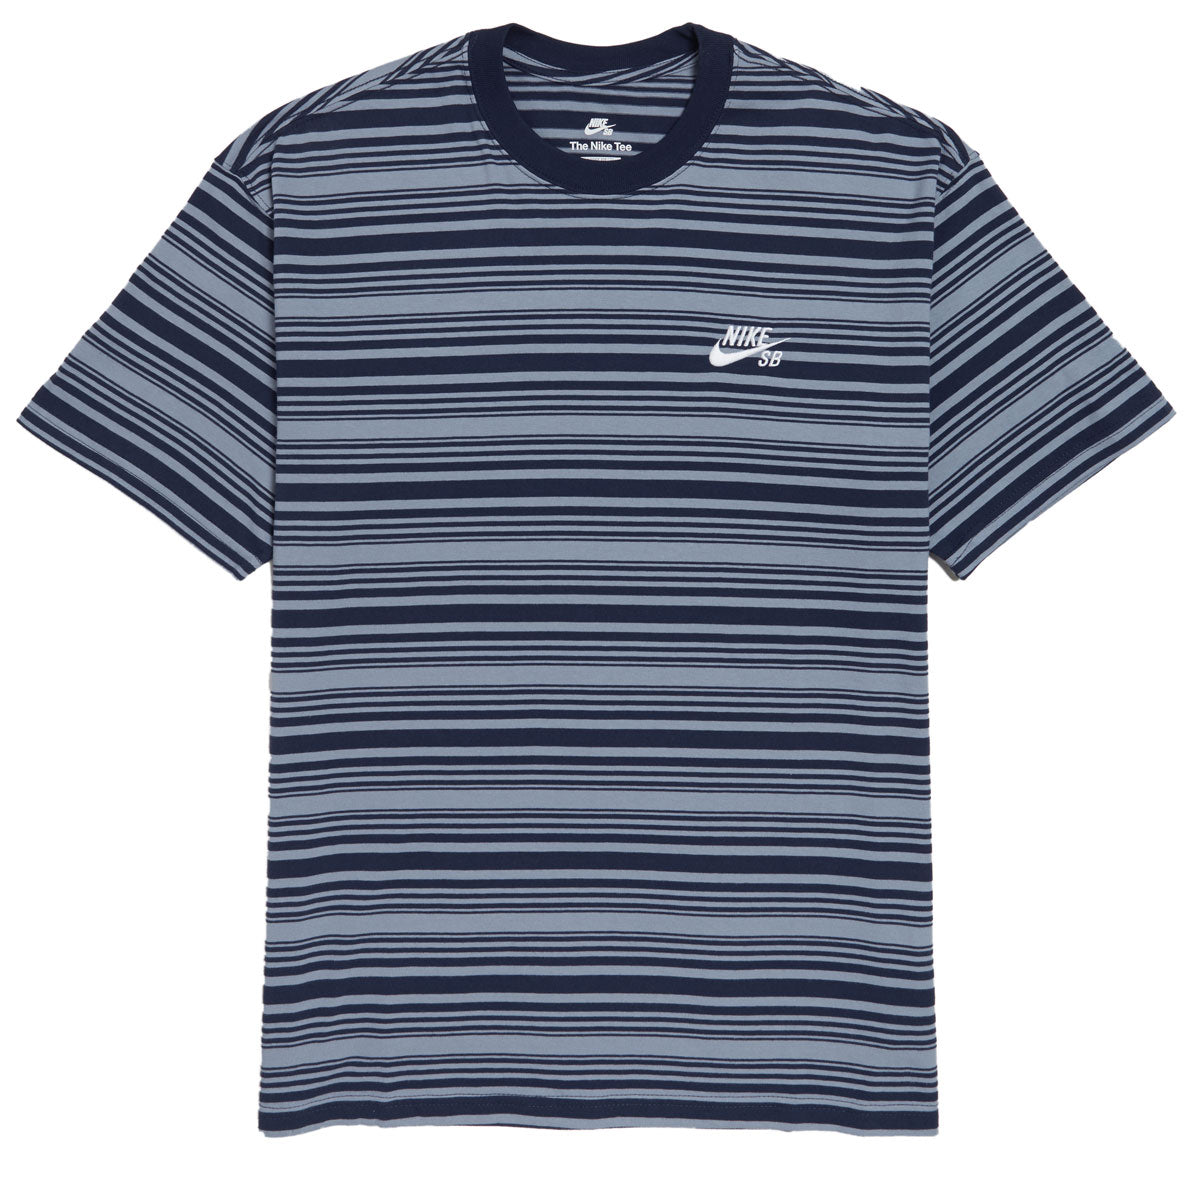 Nike SB Striped T-Shirt - Ashen Slate image 1